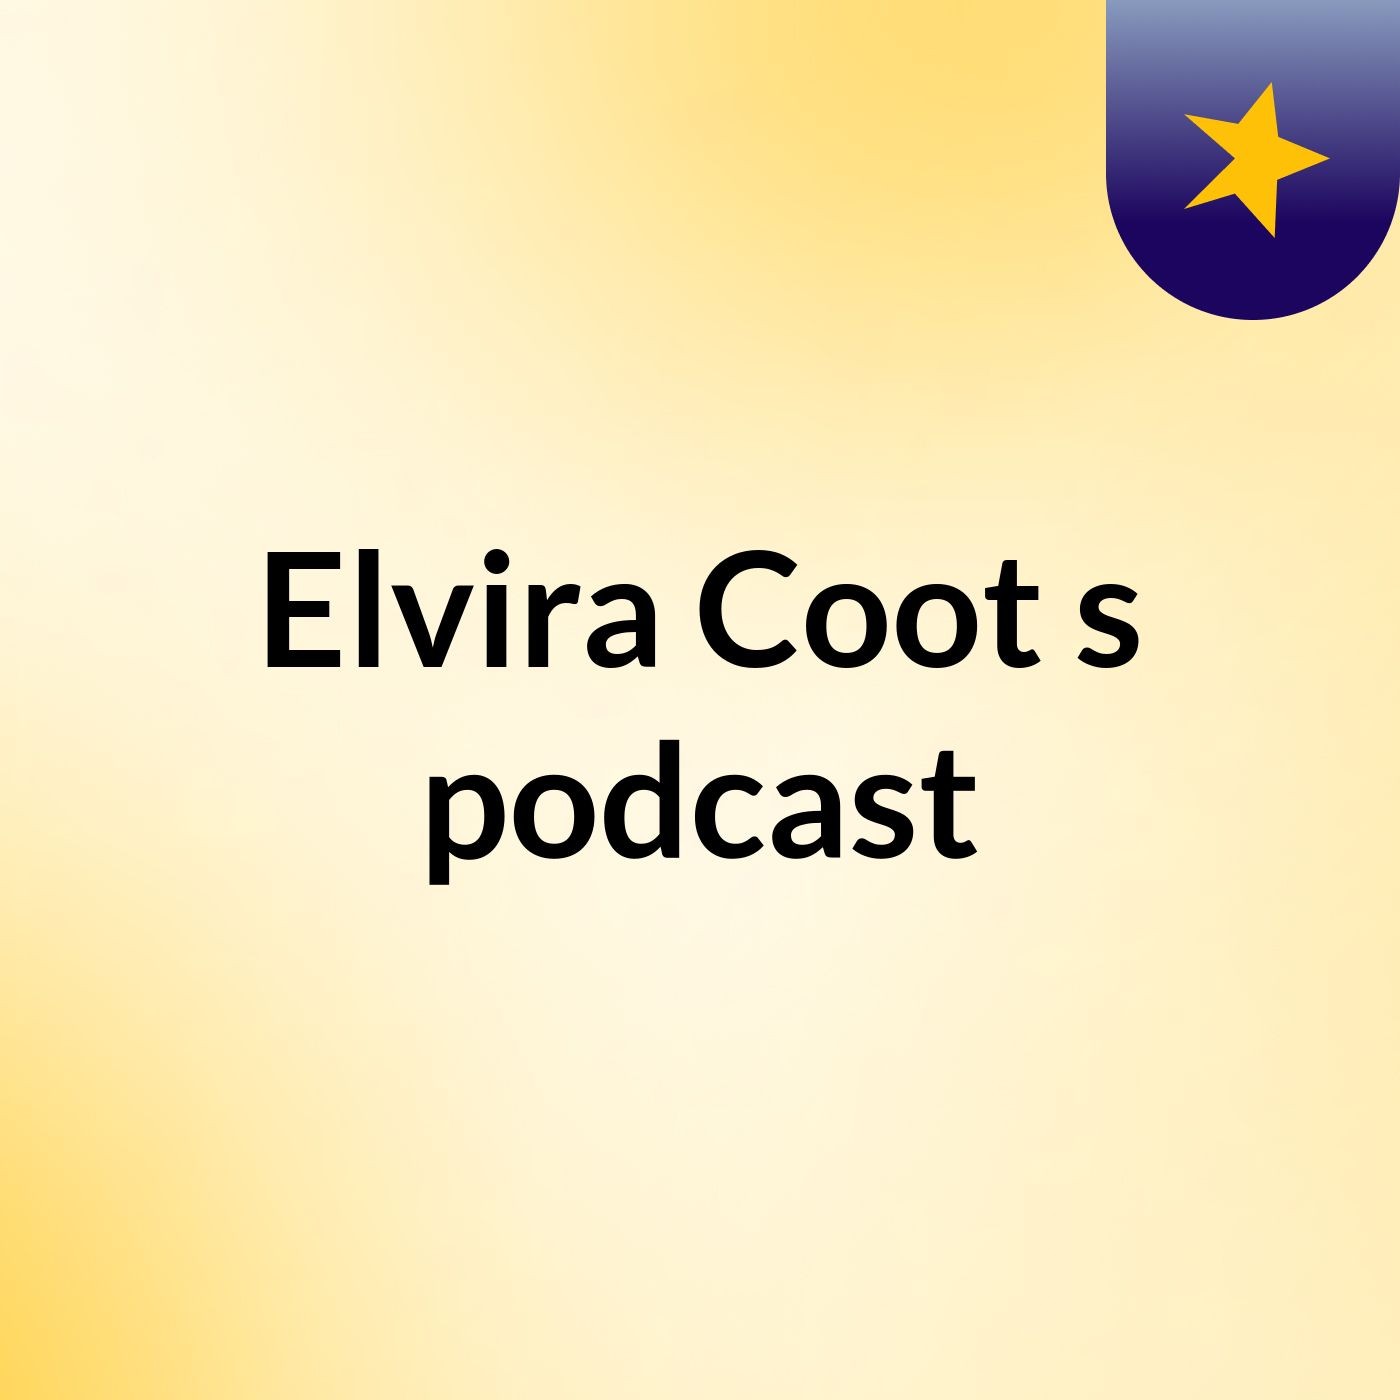 Episode 16 - Elvira Coot's podcast